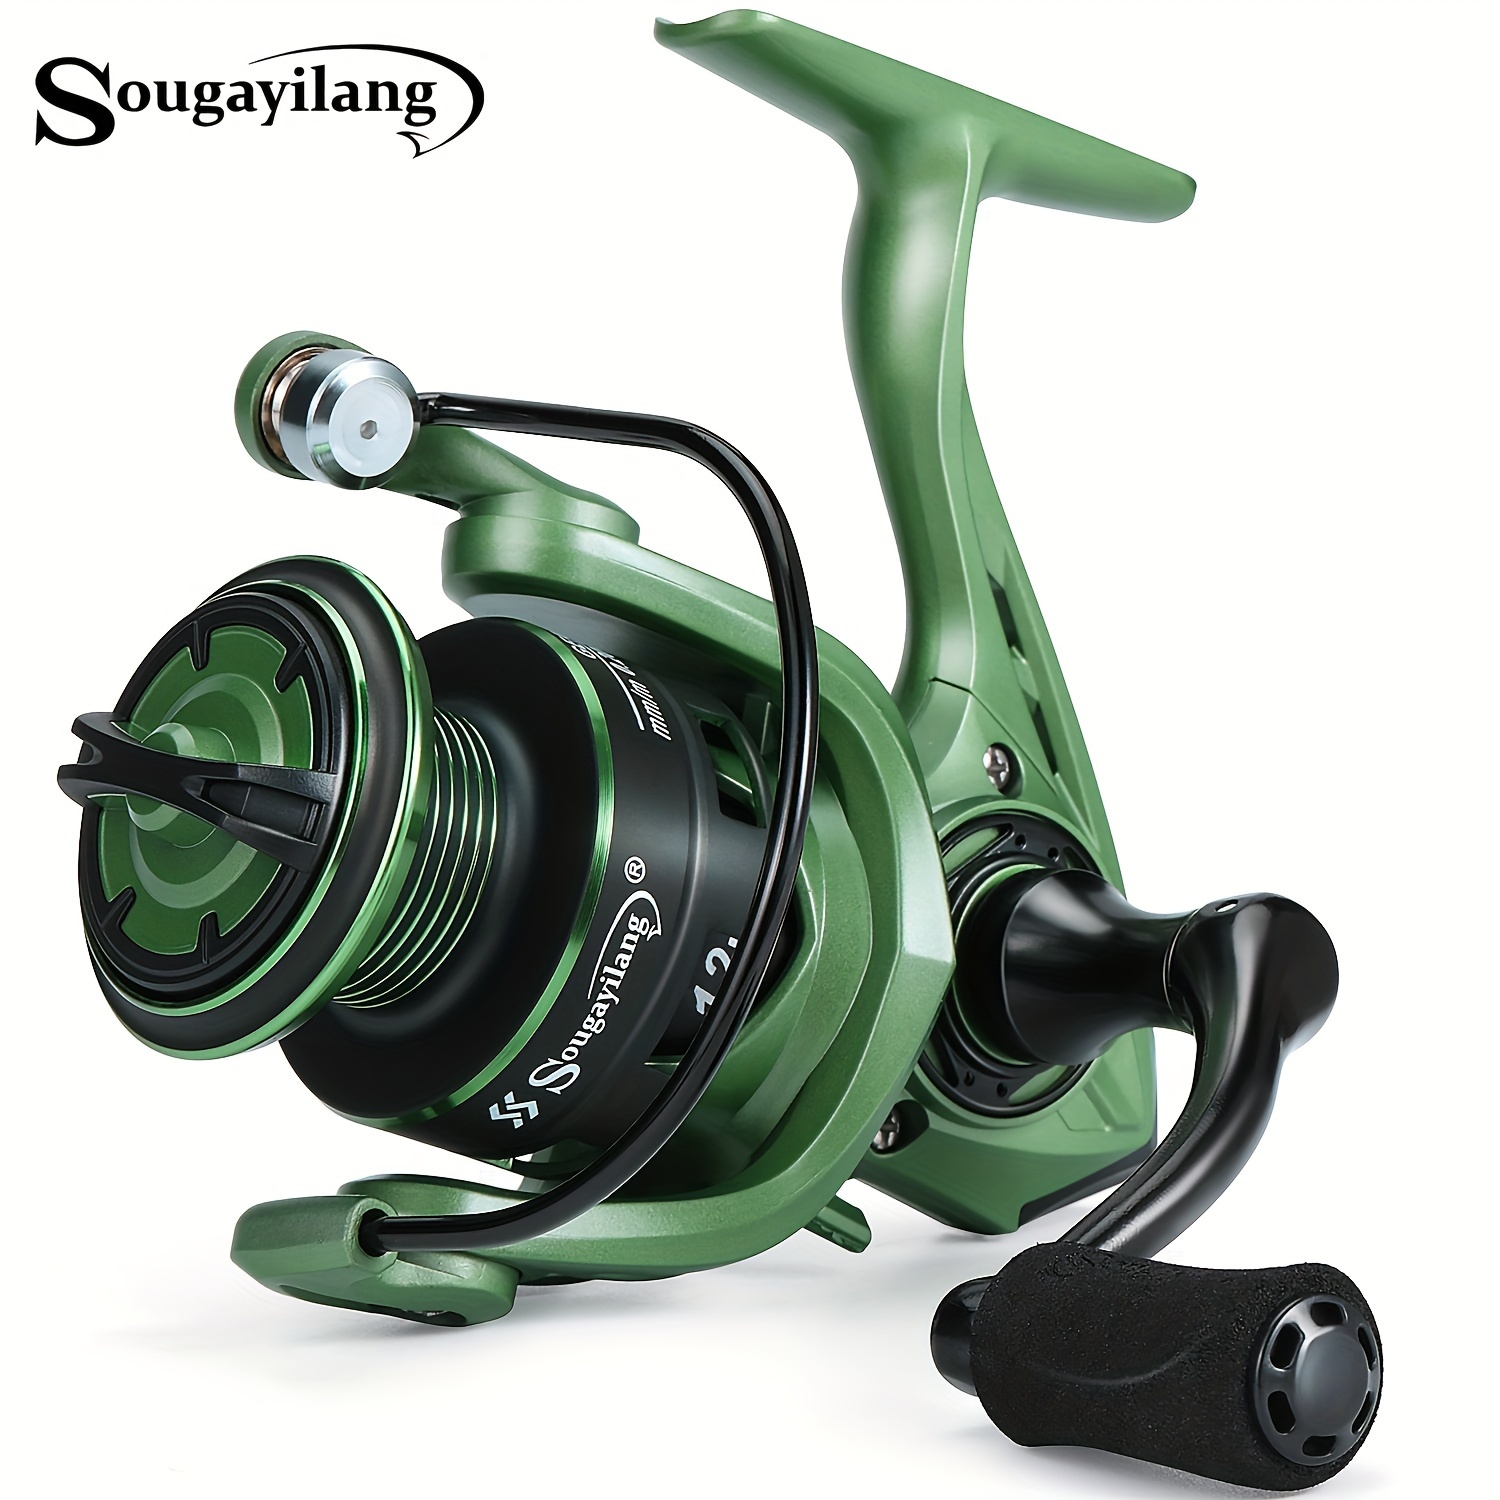 Sougayilang Aluminum Fishing Spinning Reel: Durable 5.2:1 Gear